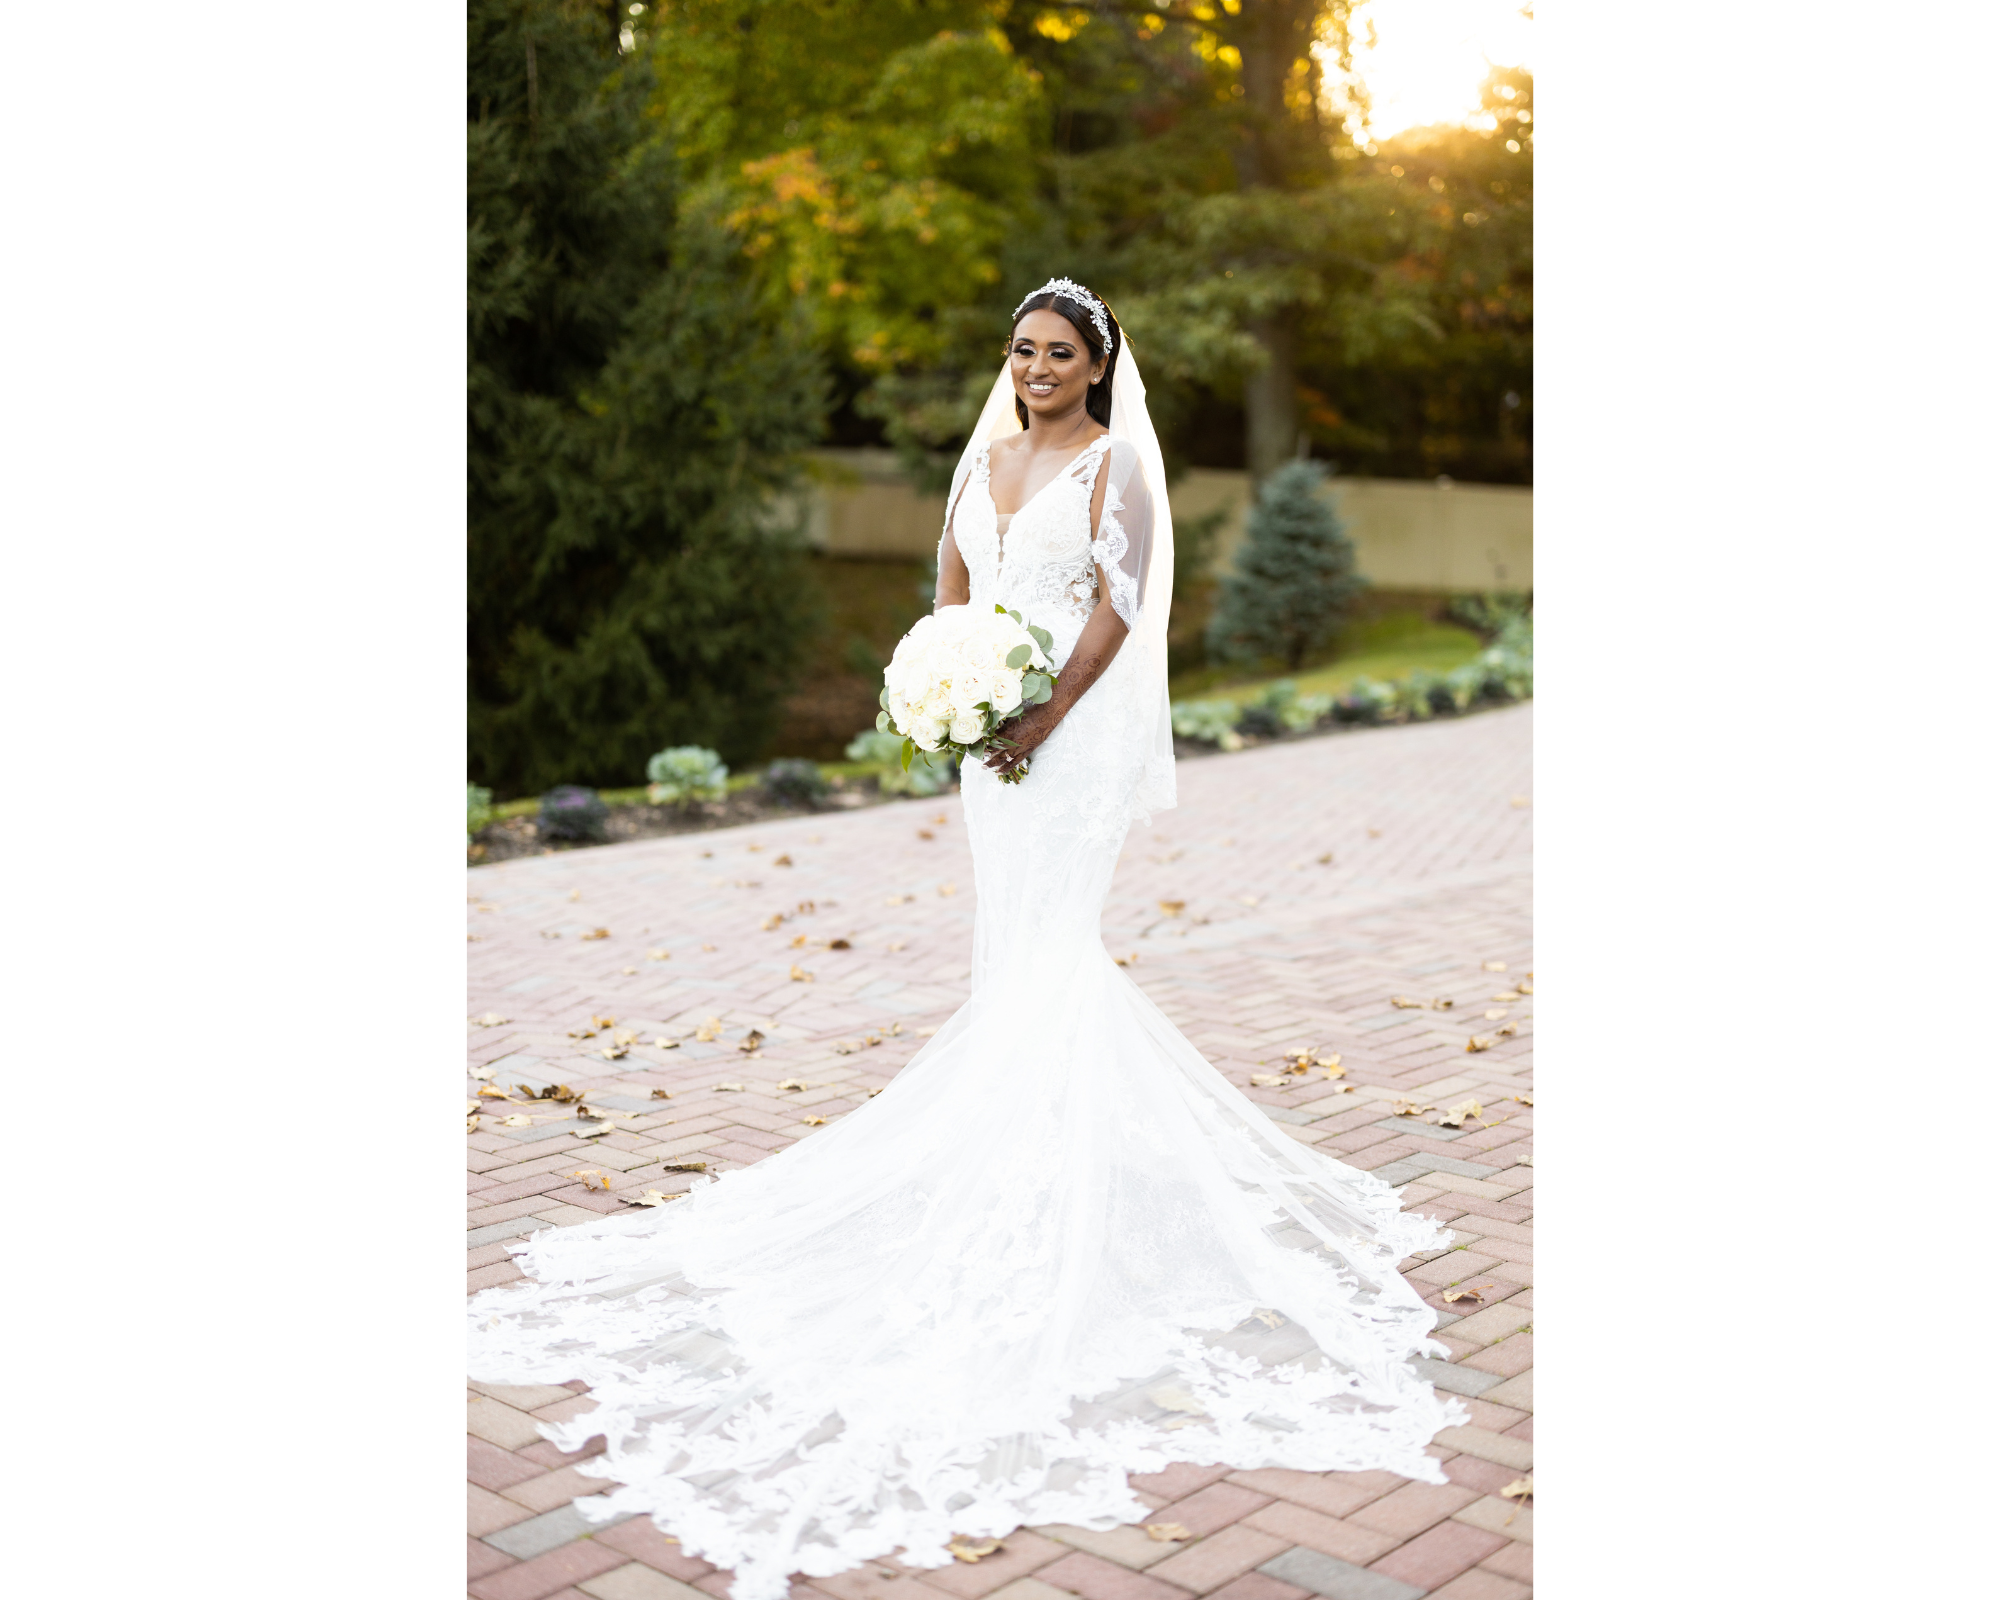 Stunning bride Avita in her lace wedding gown, veil,  and Swarovski crystal headband!